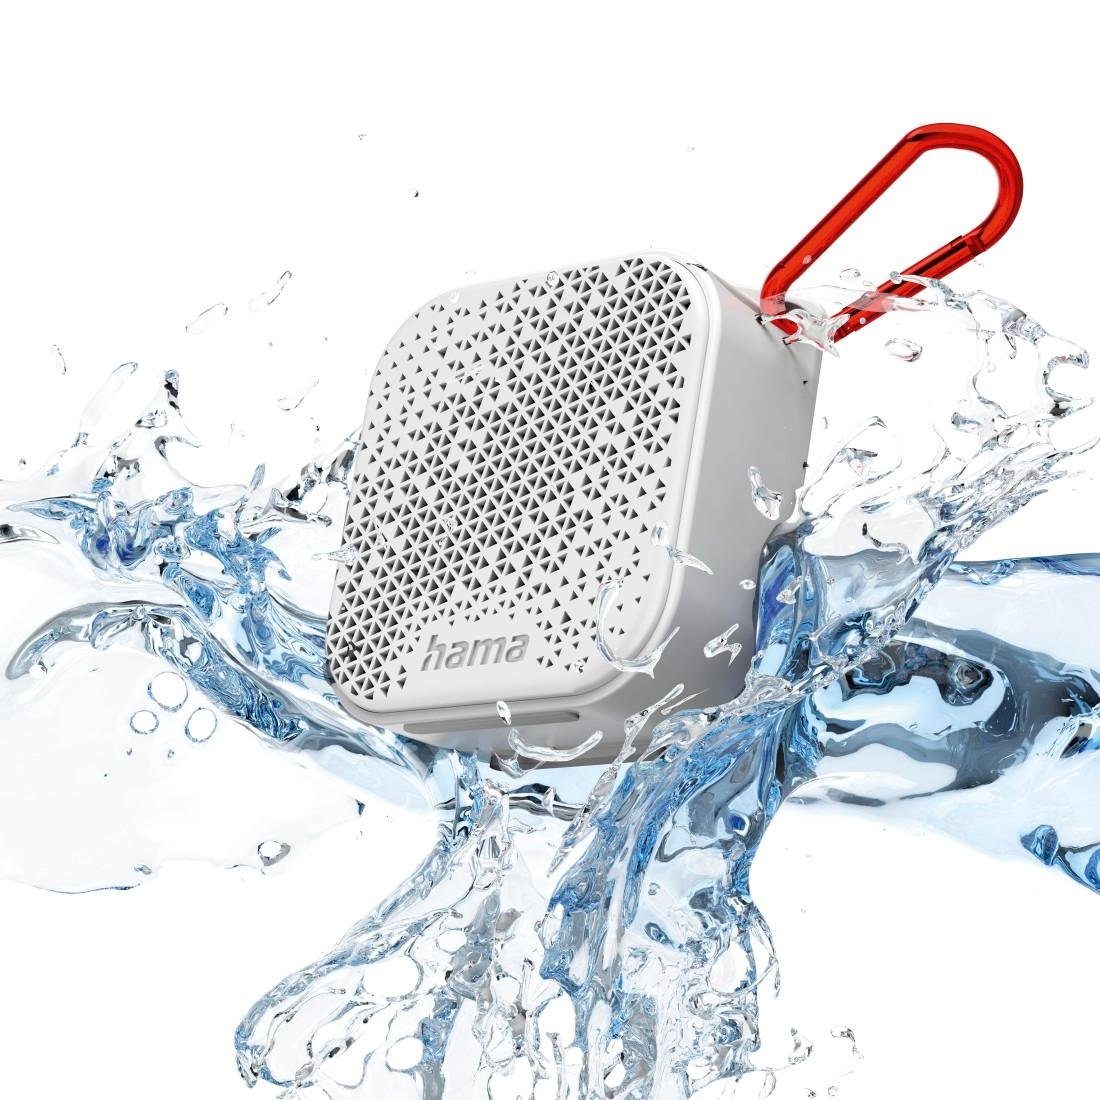 Hama Bluetooth Lautsprecher kabellos wasserdicht IPX7 Outdoor mit Akku Bluetooth-Lautsprecher (3,5 W) weiß